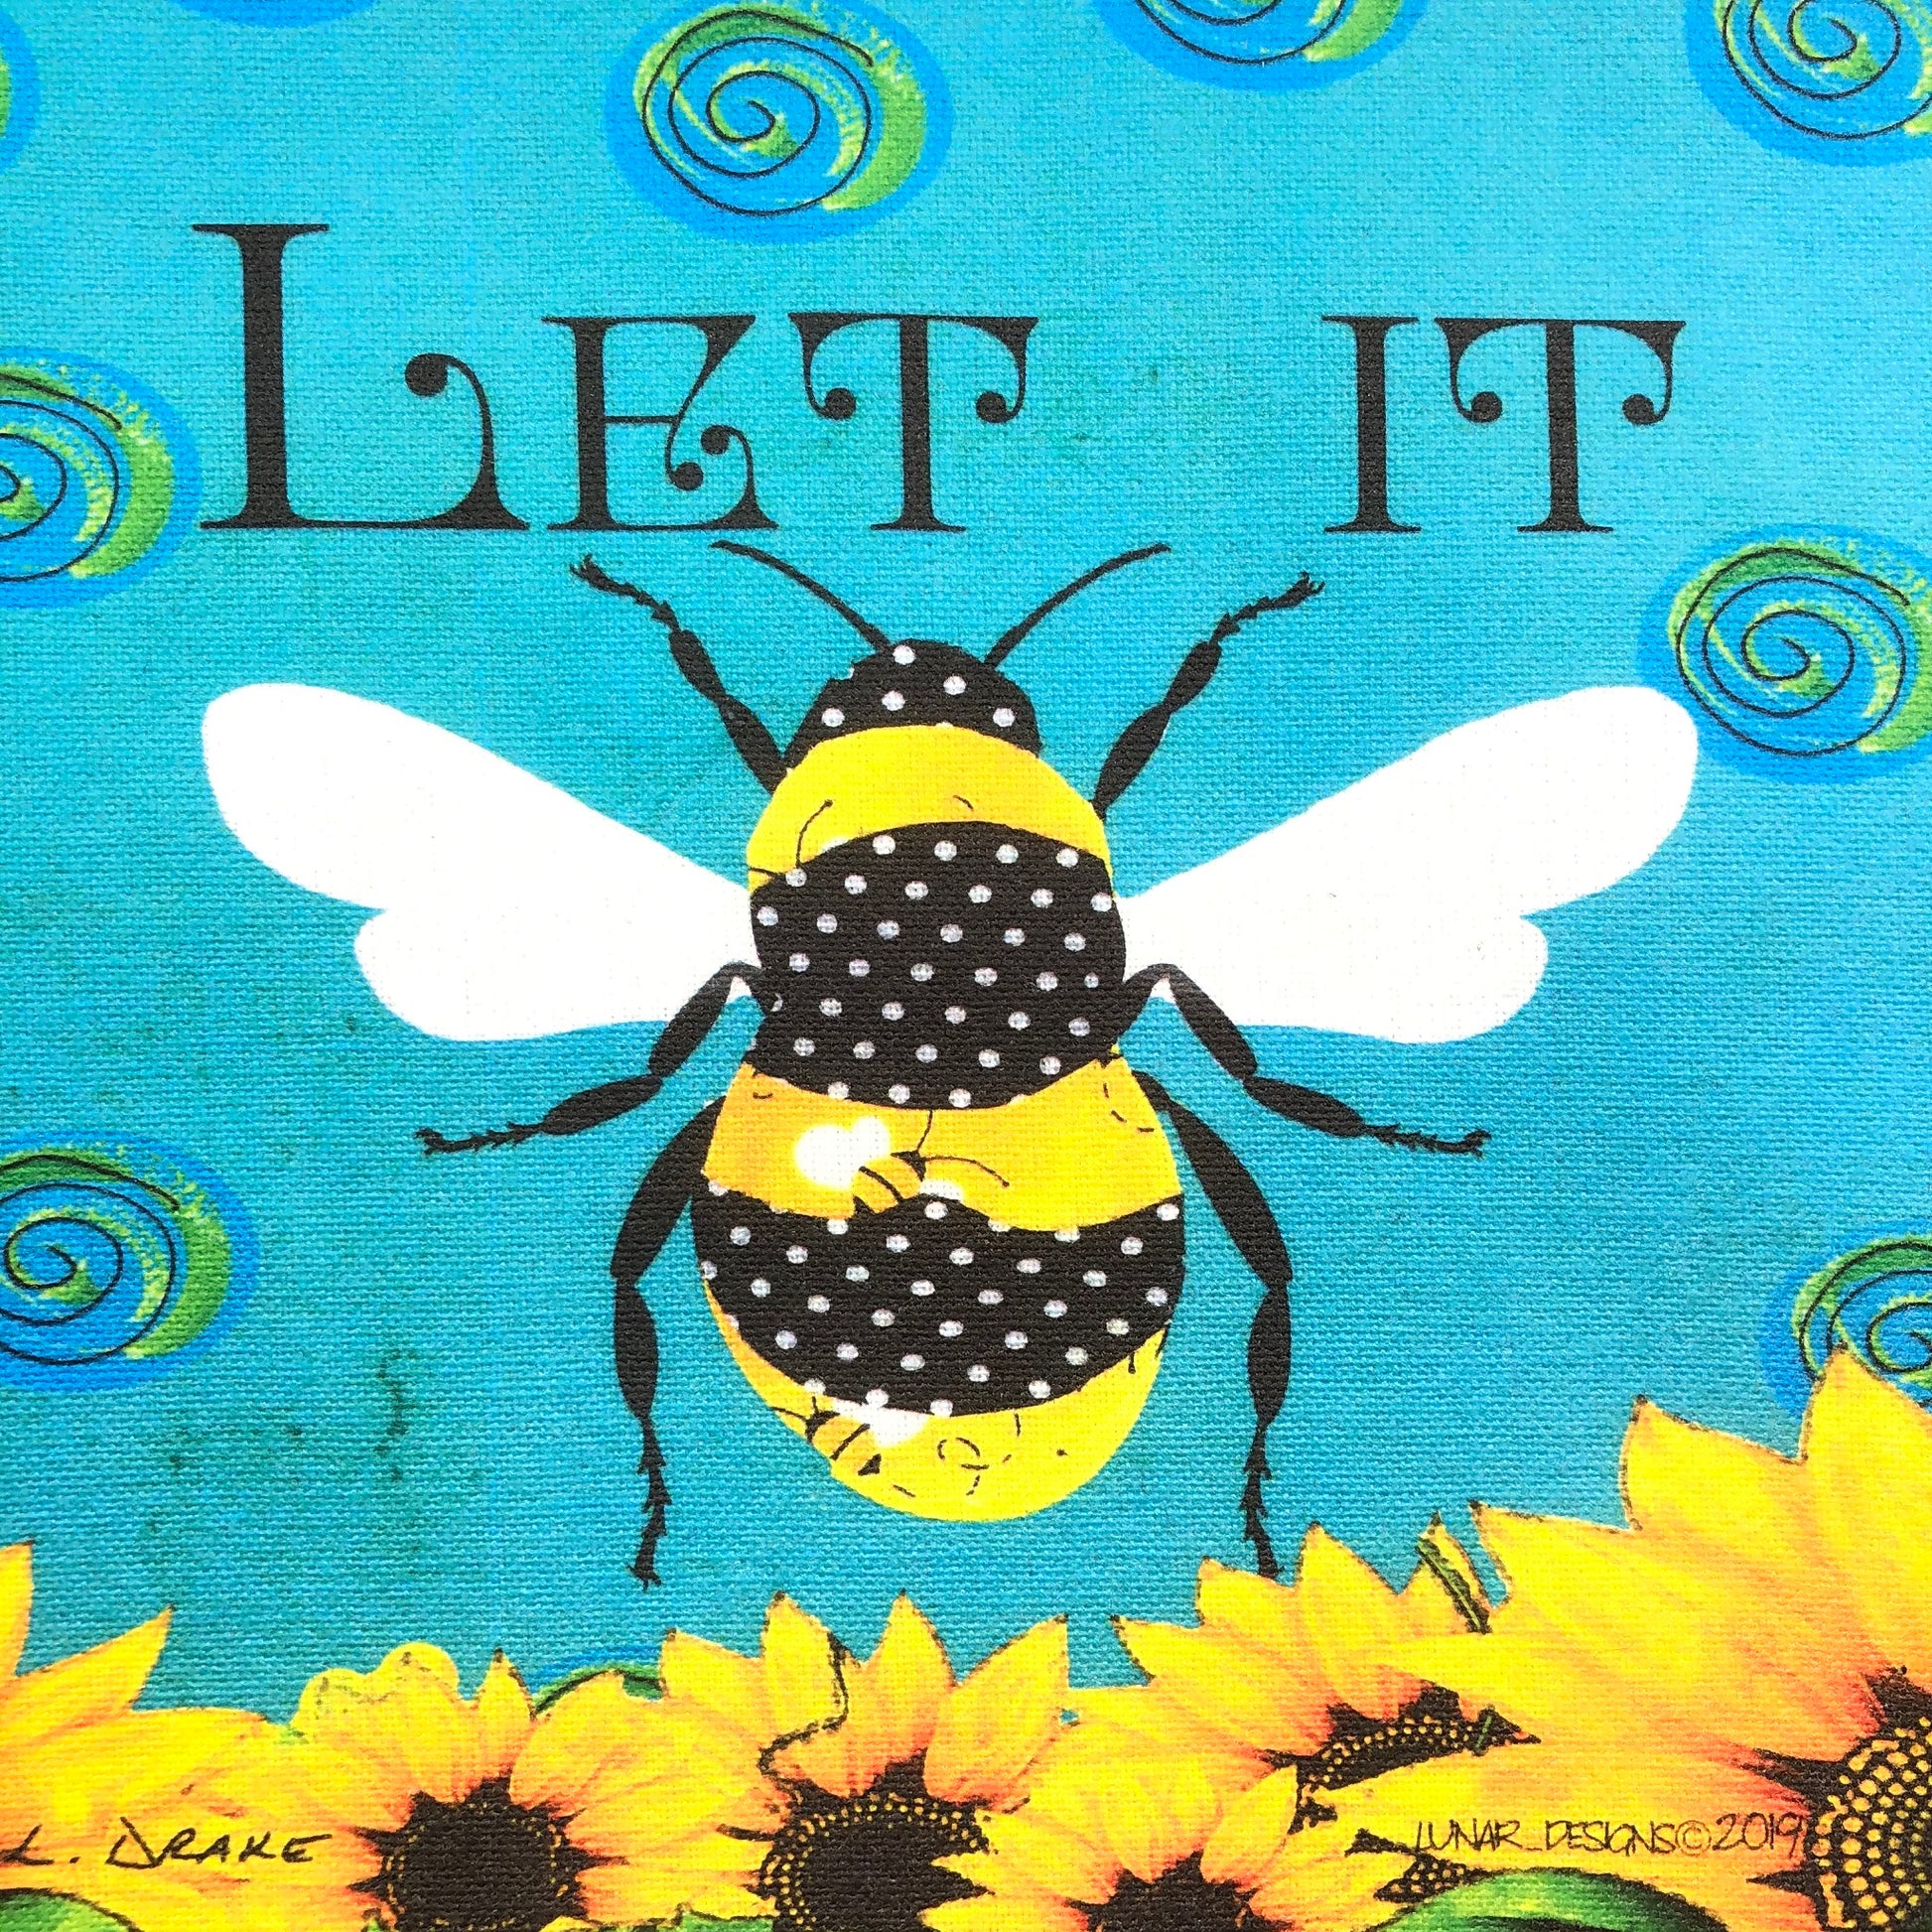 Lunar Designs Kitchen Towel #281 "Let It Bee"